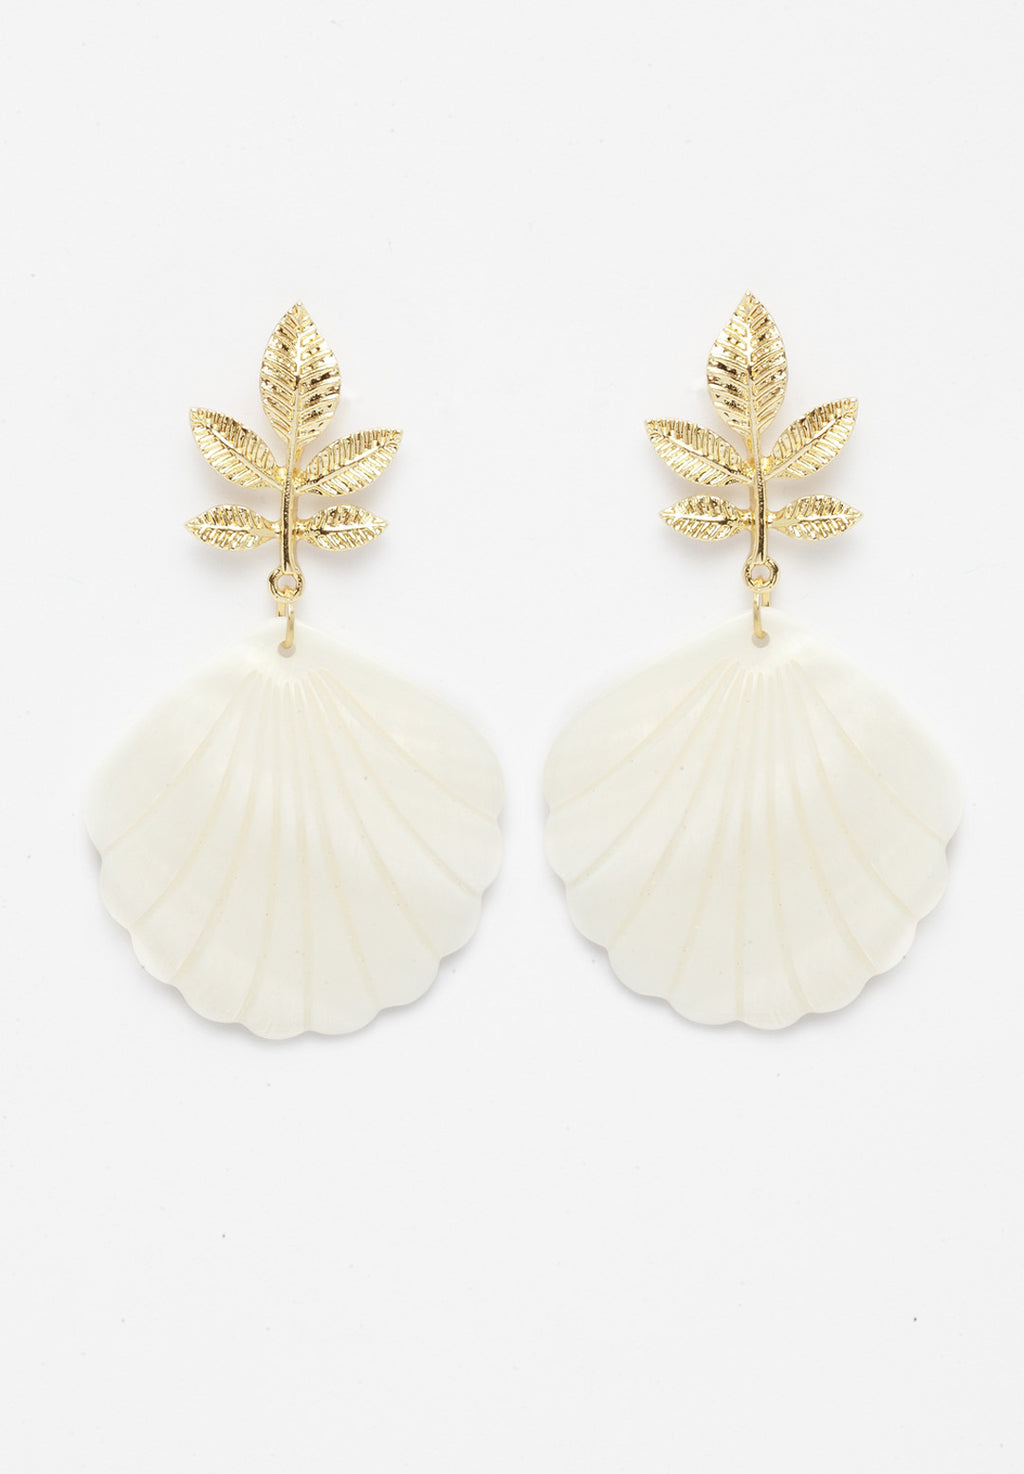 Avant-Garde Paris Modish Gold-Plated Shell Earrings